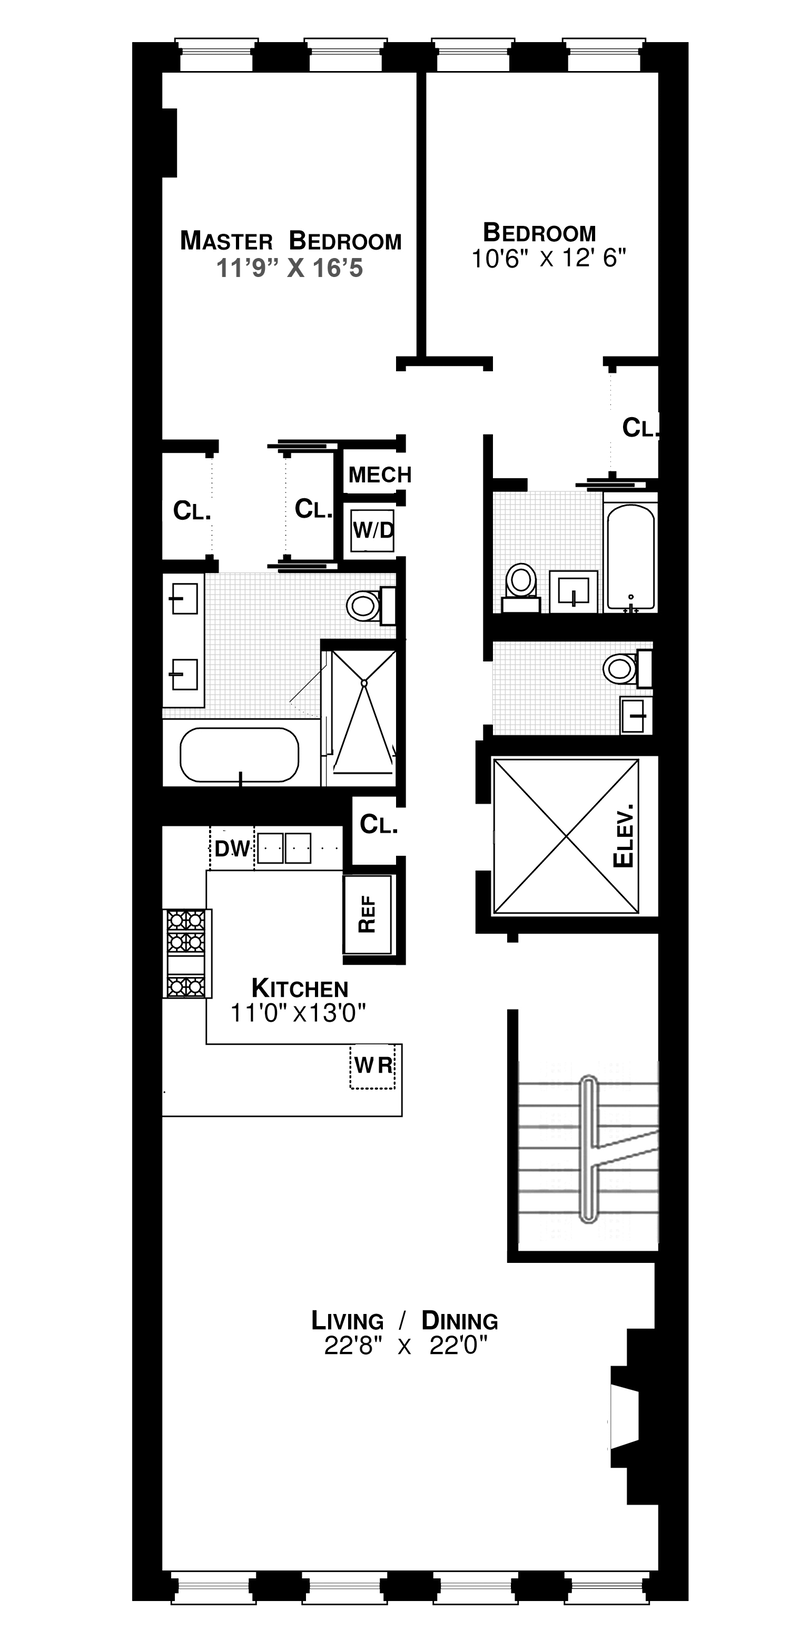 Floorplan for 146 Chambers Street